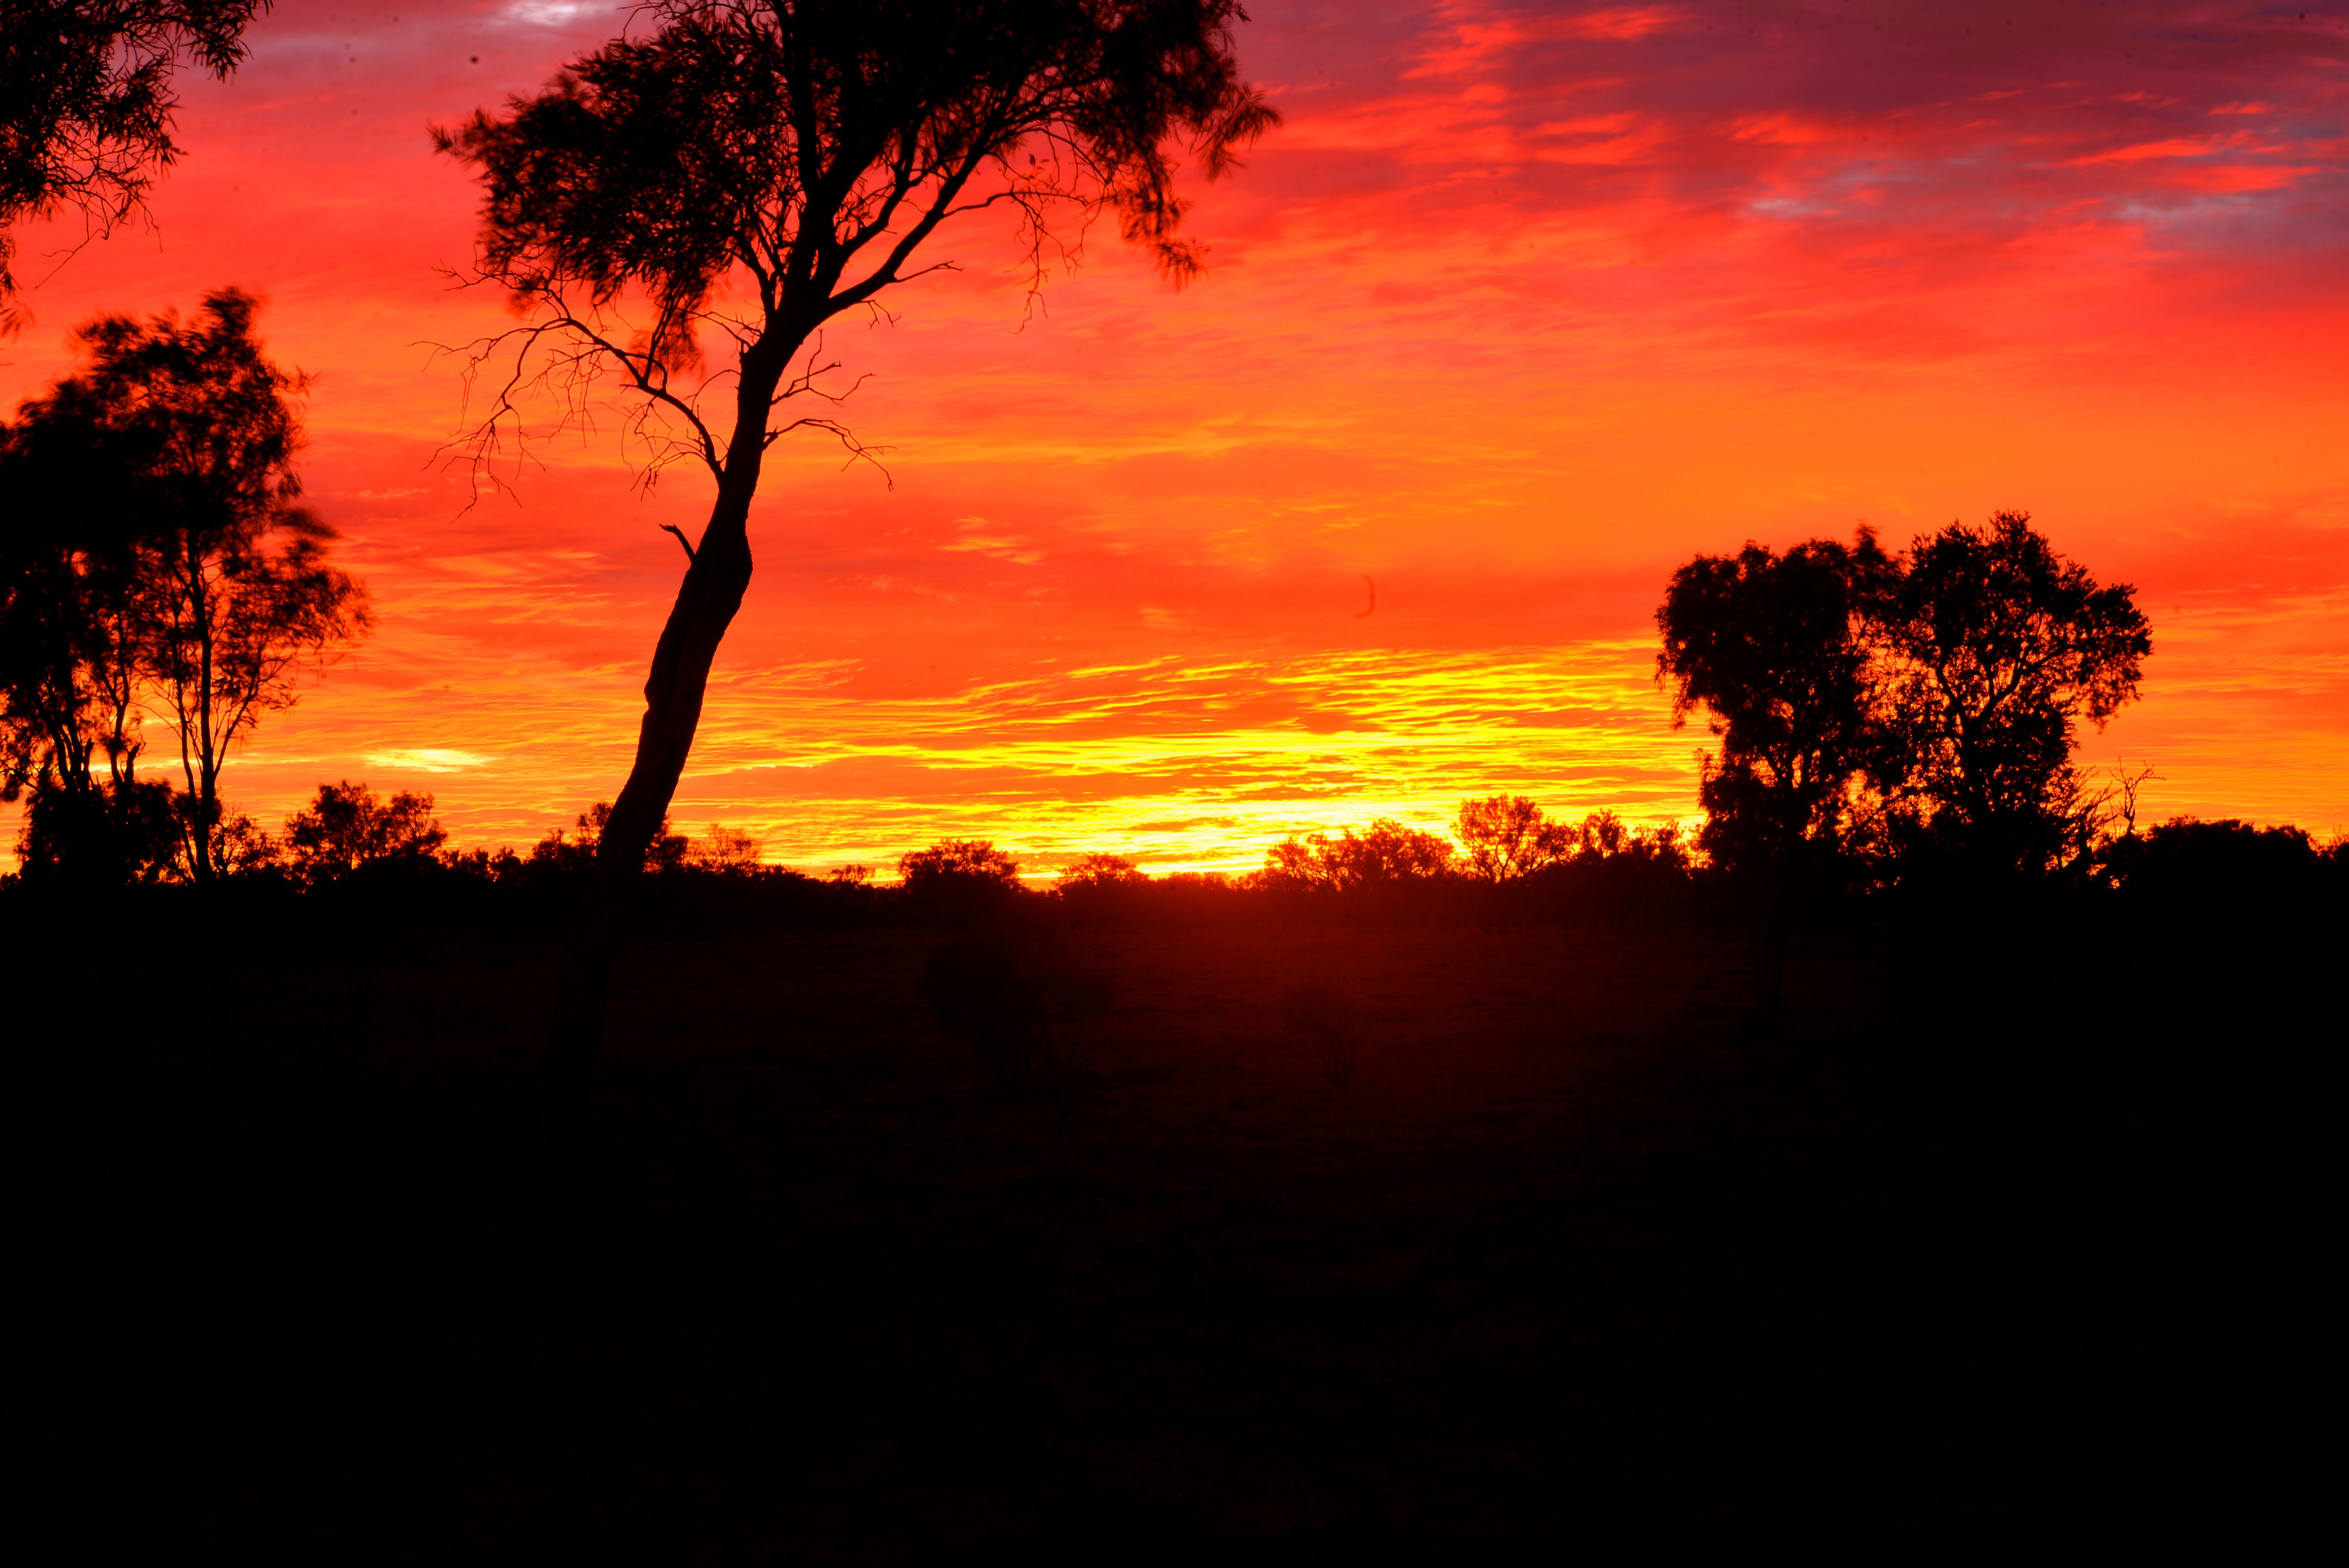 The Australian Outback (At Sunset) – XPLORE